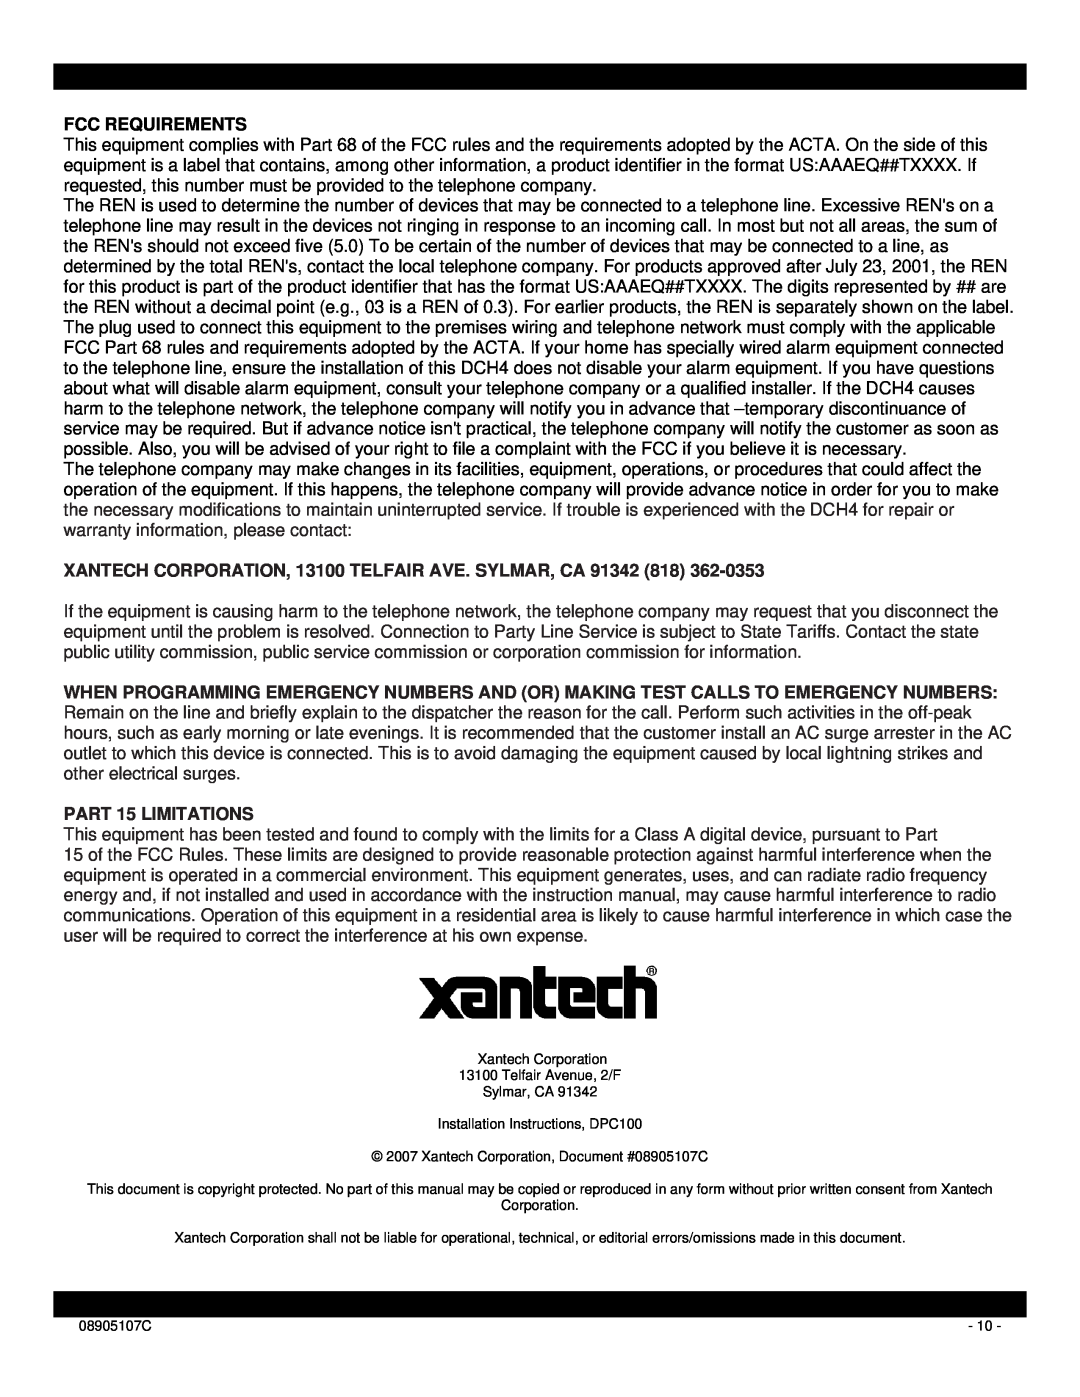 Xantech DCH4 Fcc Requirements, XANTECH CORPORATION, 13100 TELFAIR AVE. SYLMAR, CA, PART 15 LIMITATIONS 